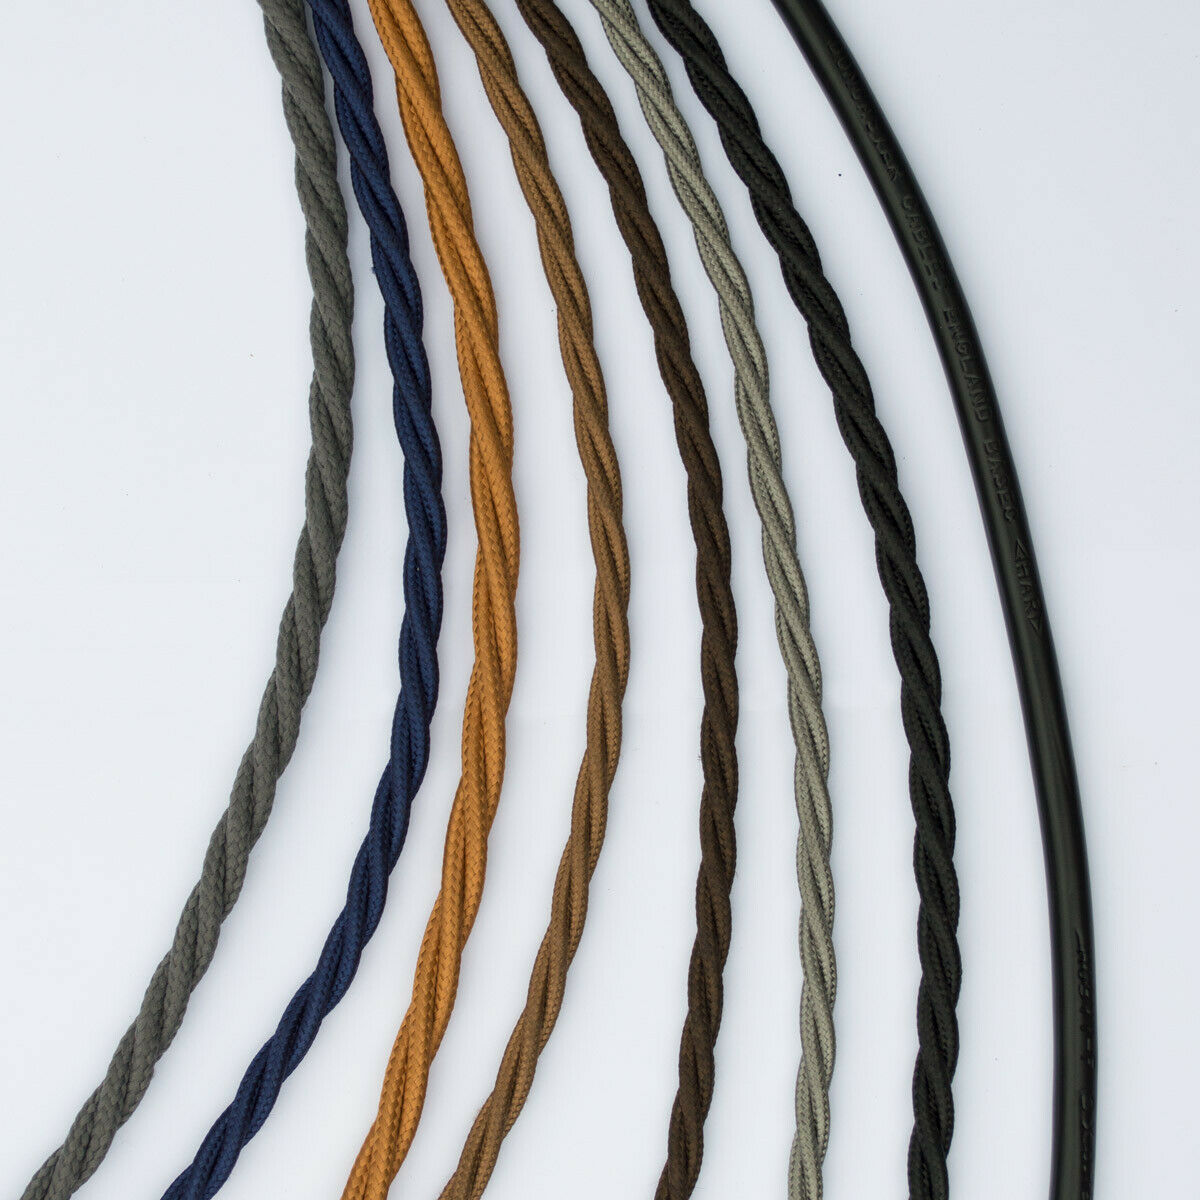 2 Core 8 Amp Braided Fabric Twisted and Round Cable Lighting Flex~2340 - LEDSone UK Ltd